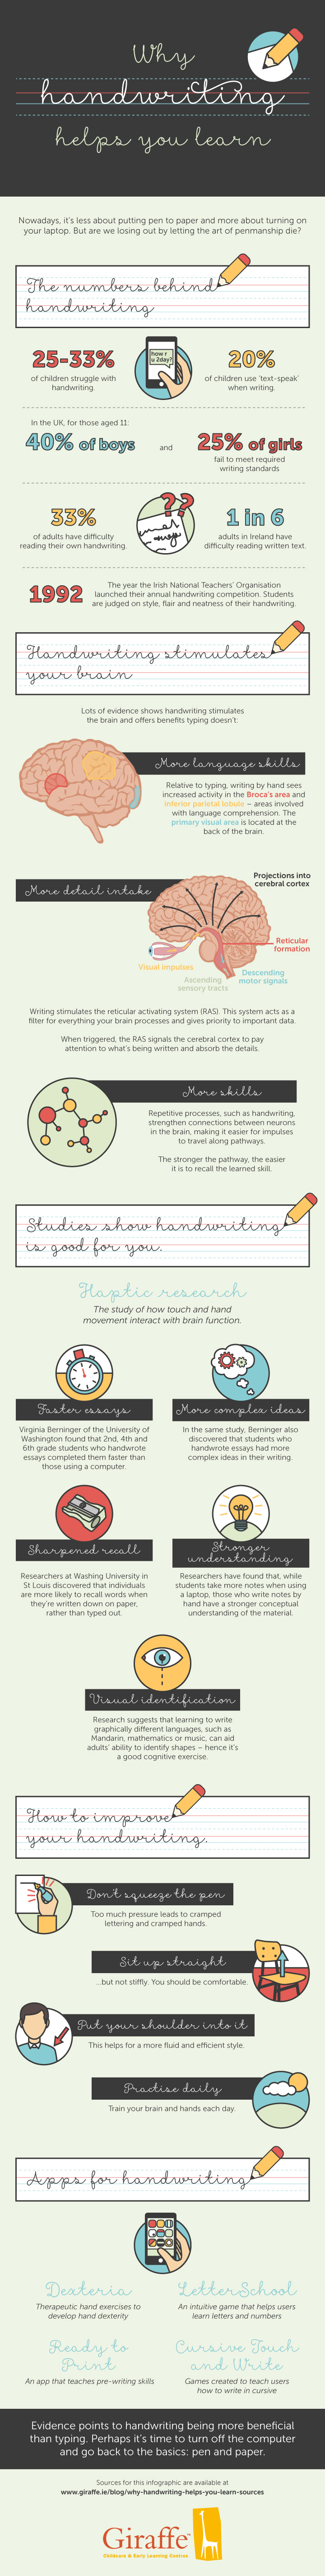 http://selectedreads.com/wp-content/uploads/2015/02/How-Handwriting-Enhances-Learning-Infographic.jpg